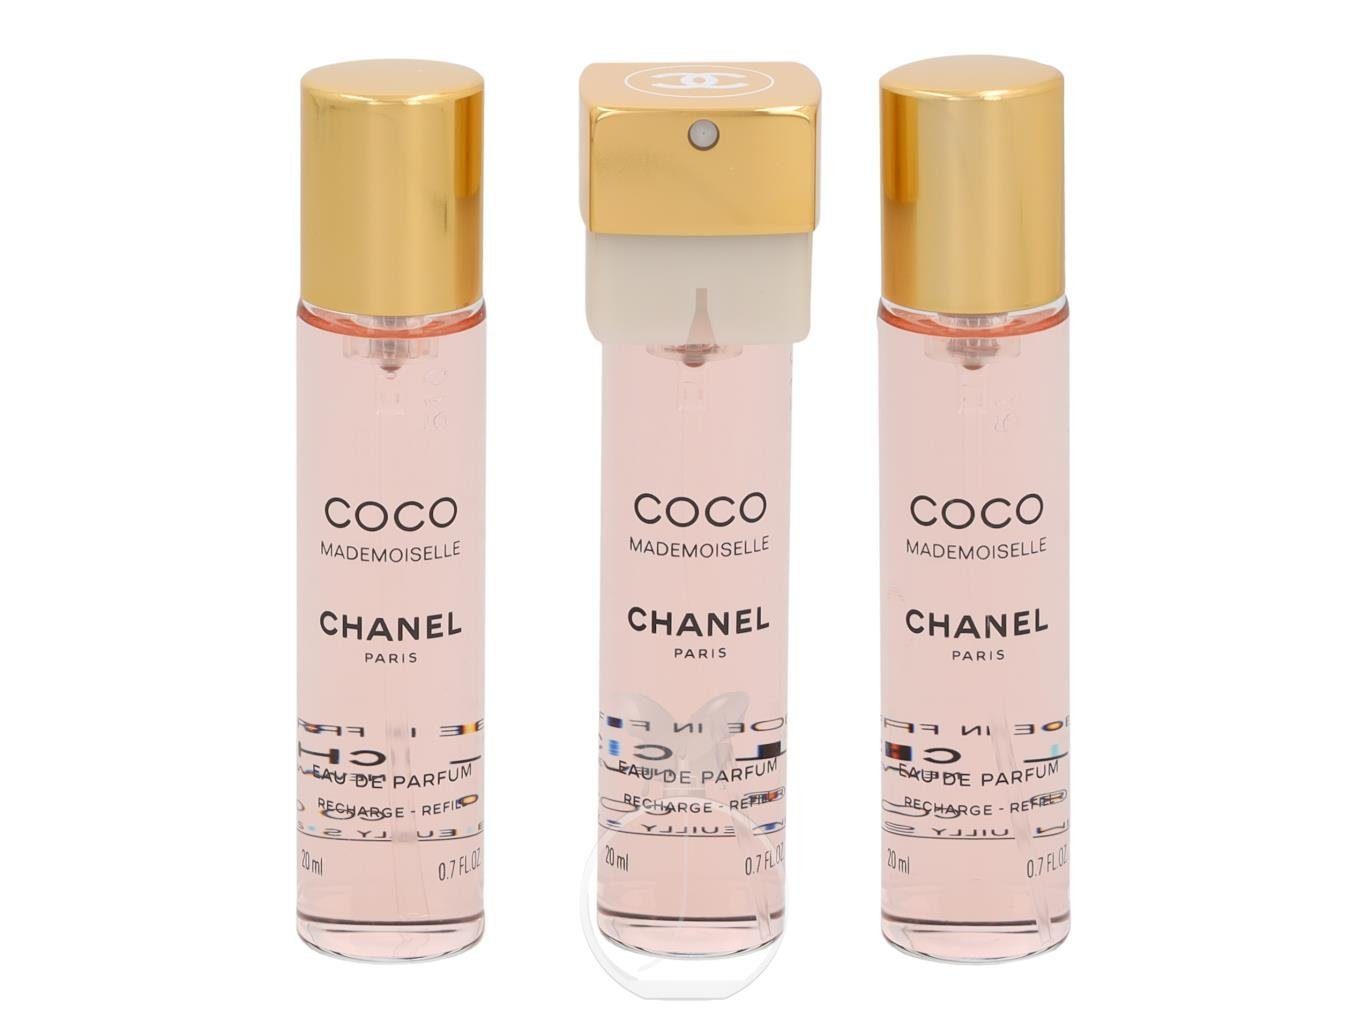 Chanel Coco Mademoiselle - Eau de Toilette (3 refills)